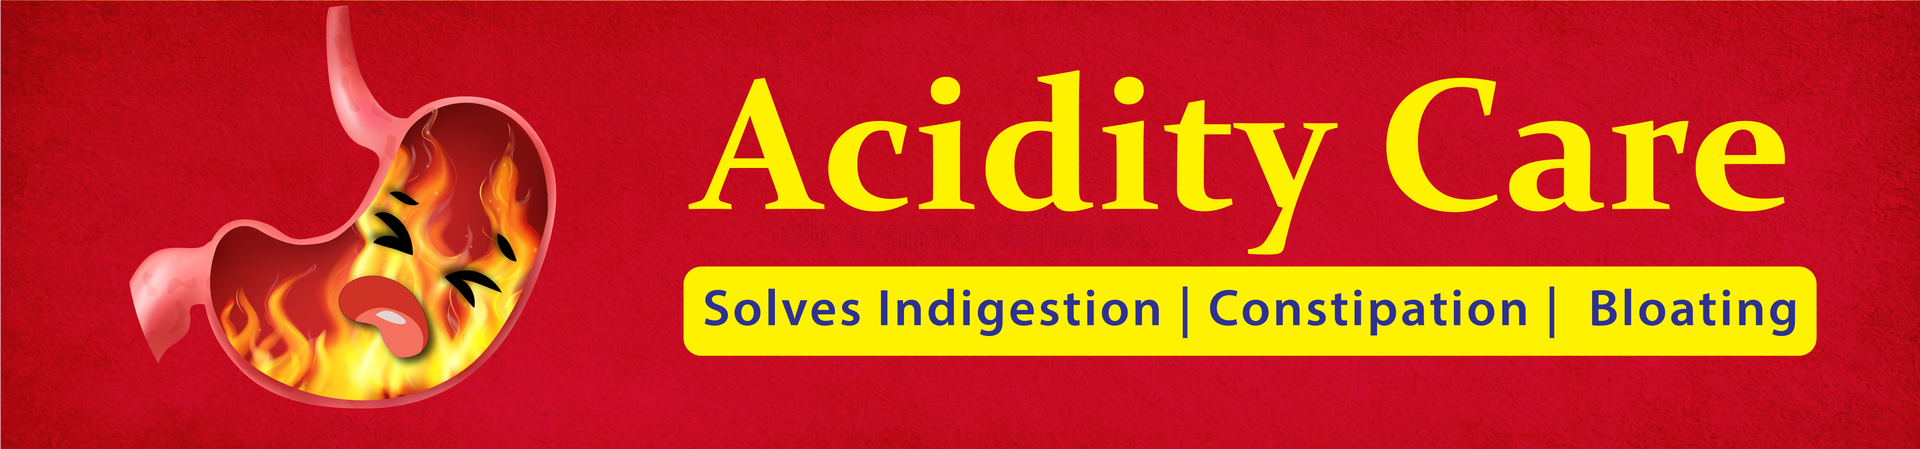 Ayurvedic Medicine for acidity - Acidity Care